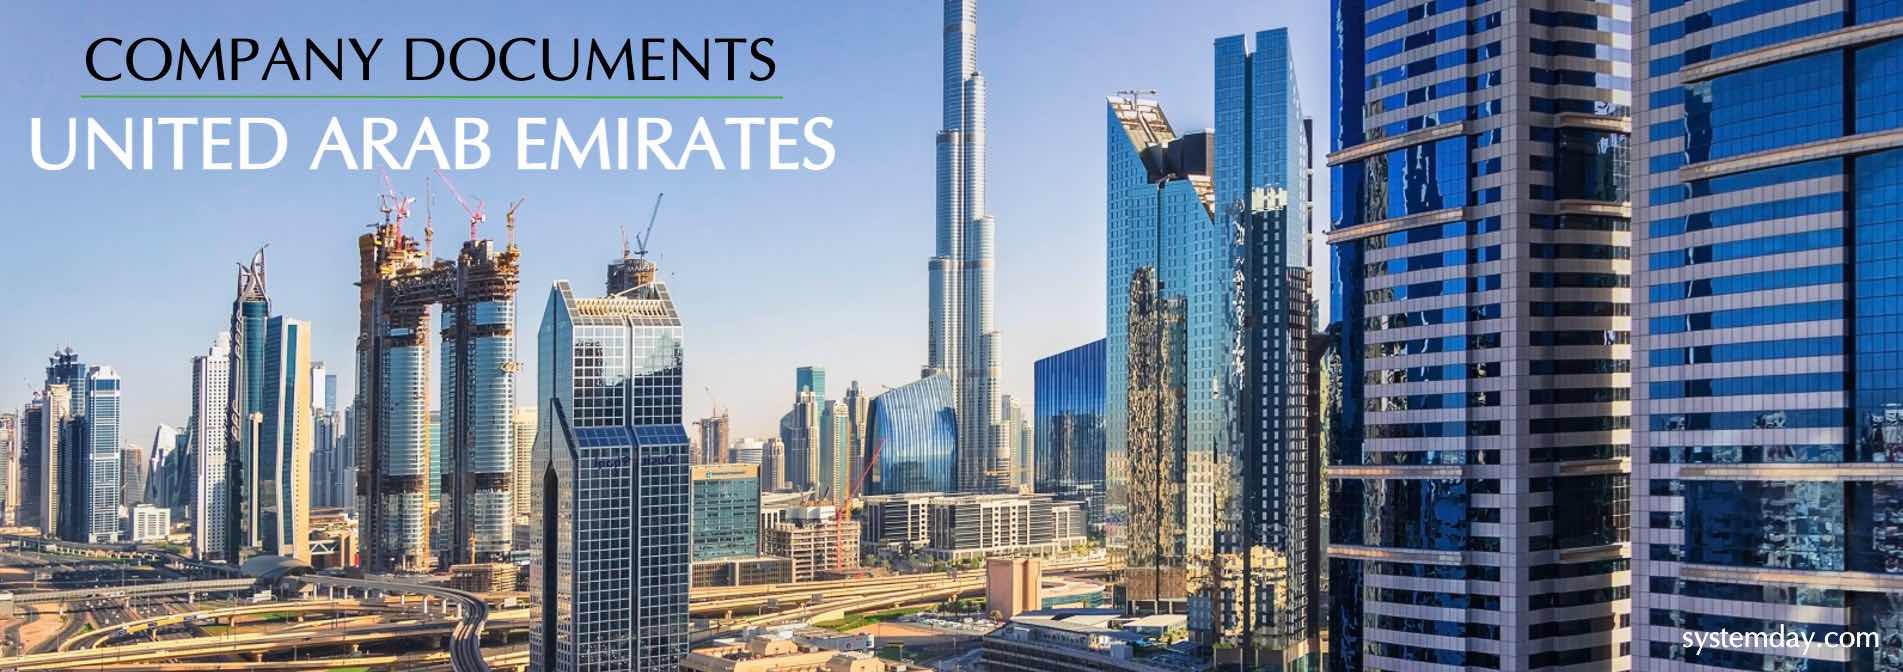 UAE Company Documents